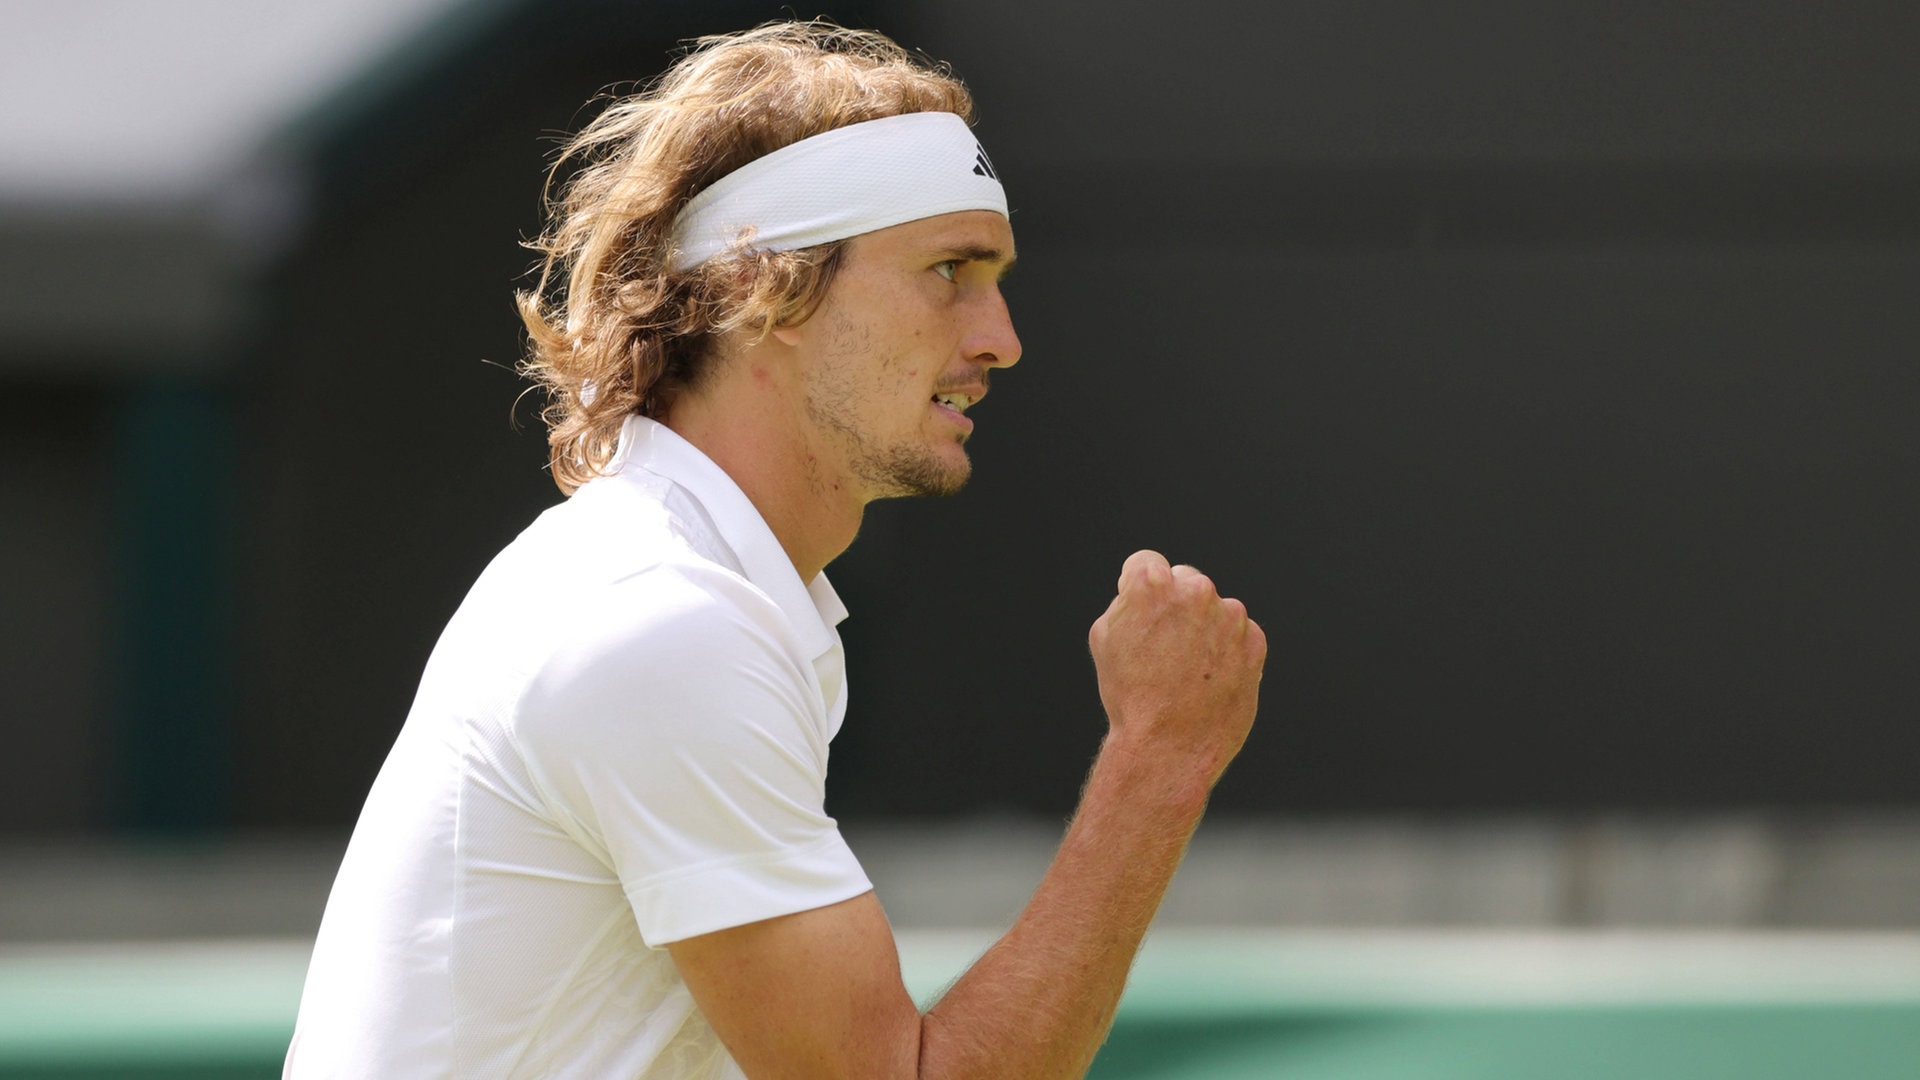 Wimbledon Zverev scoutet Gegner bei YouTube und kritisiert Veranstalter NDR.de - Sport